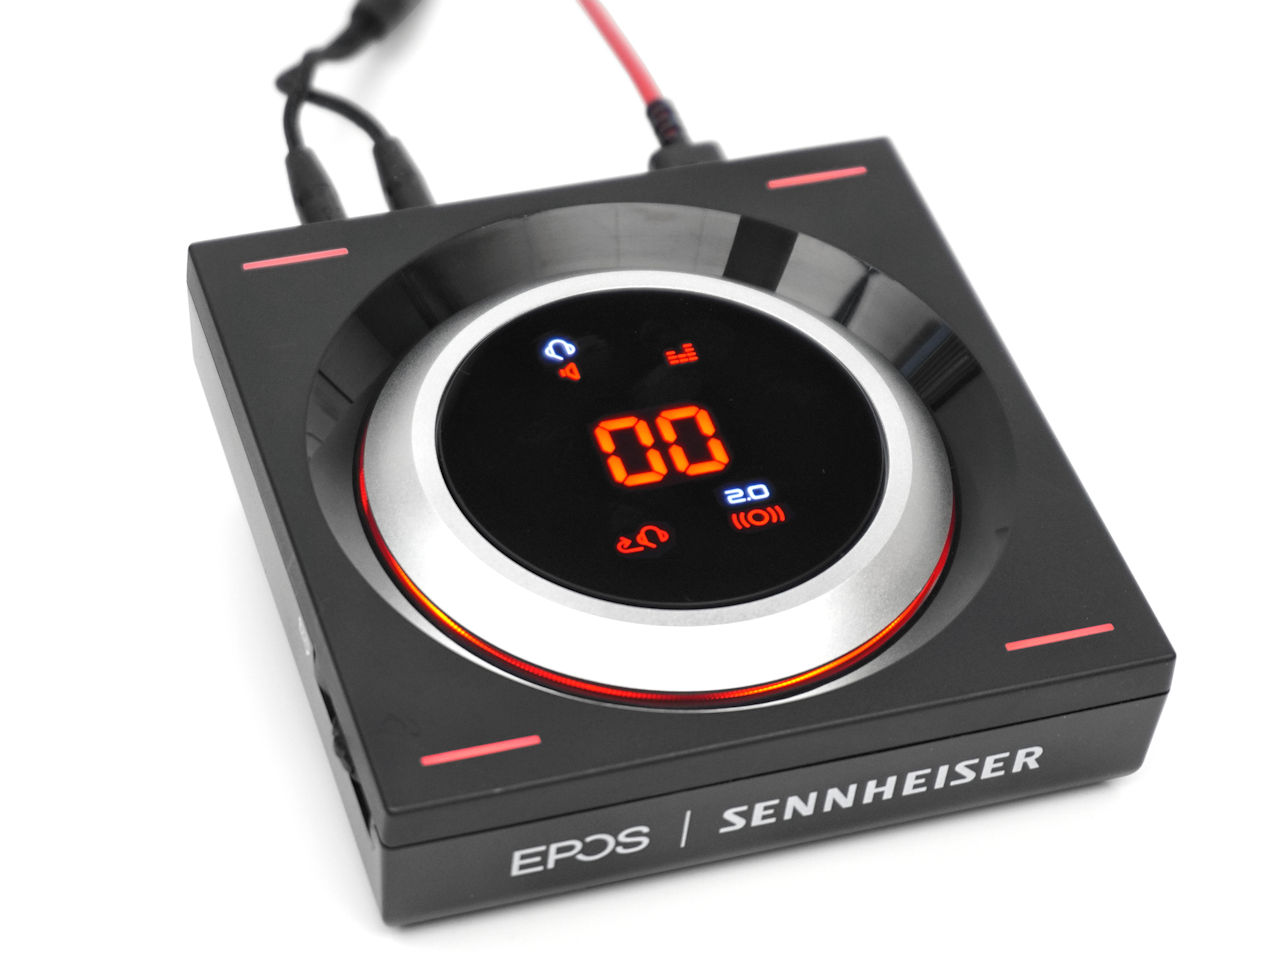 EPOS | Sennheiser GSX 1200 Pro